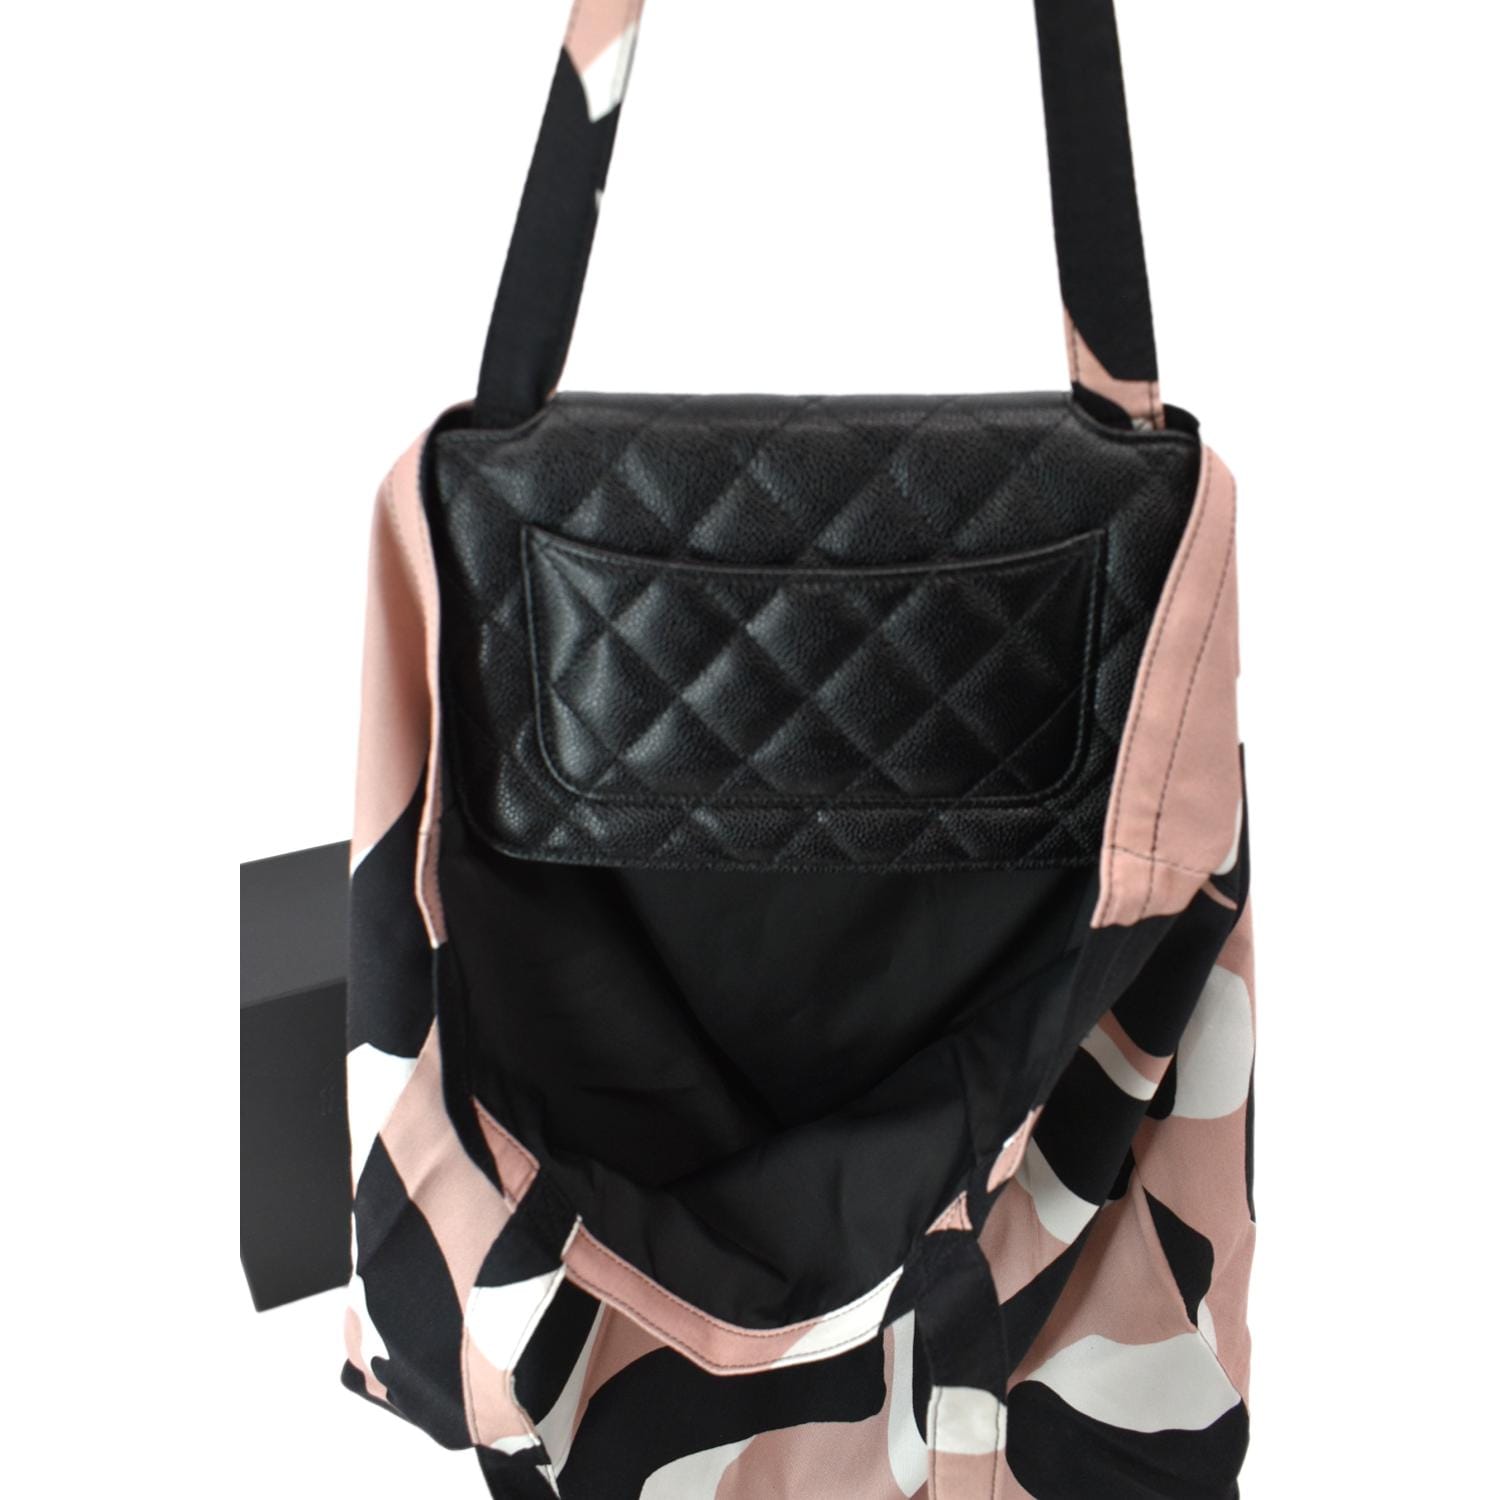 Chanel Tabatière Kiss Lock Bag - black leather - crossbody 2016 at